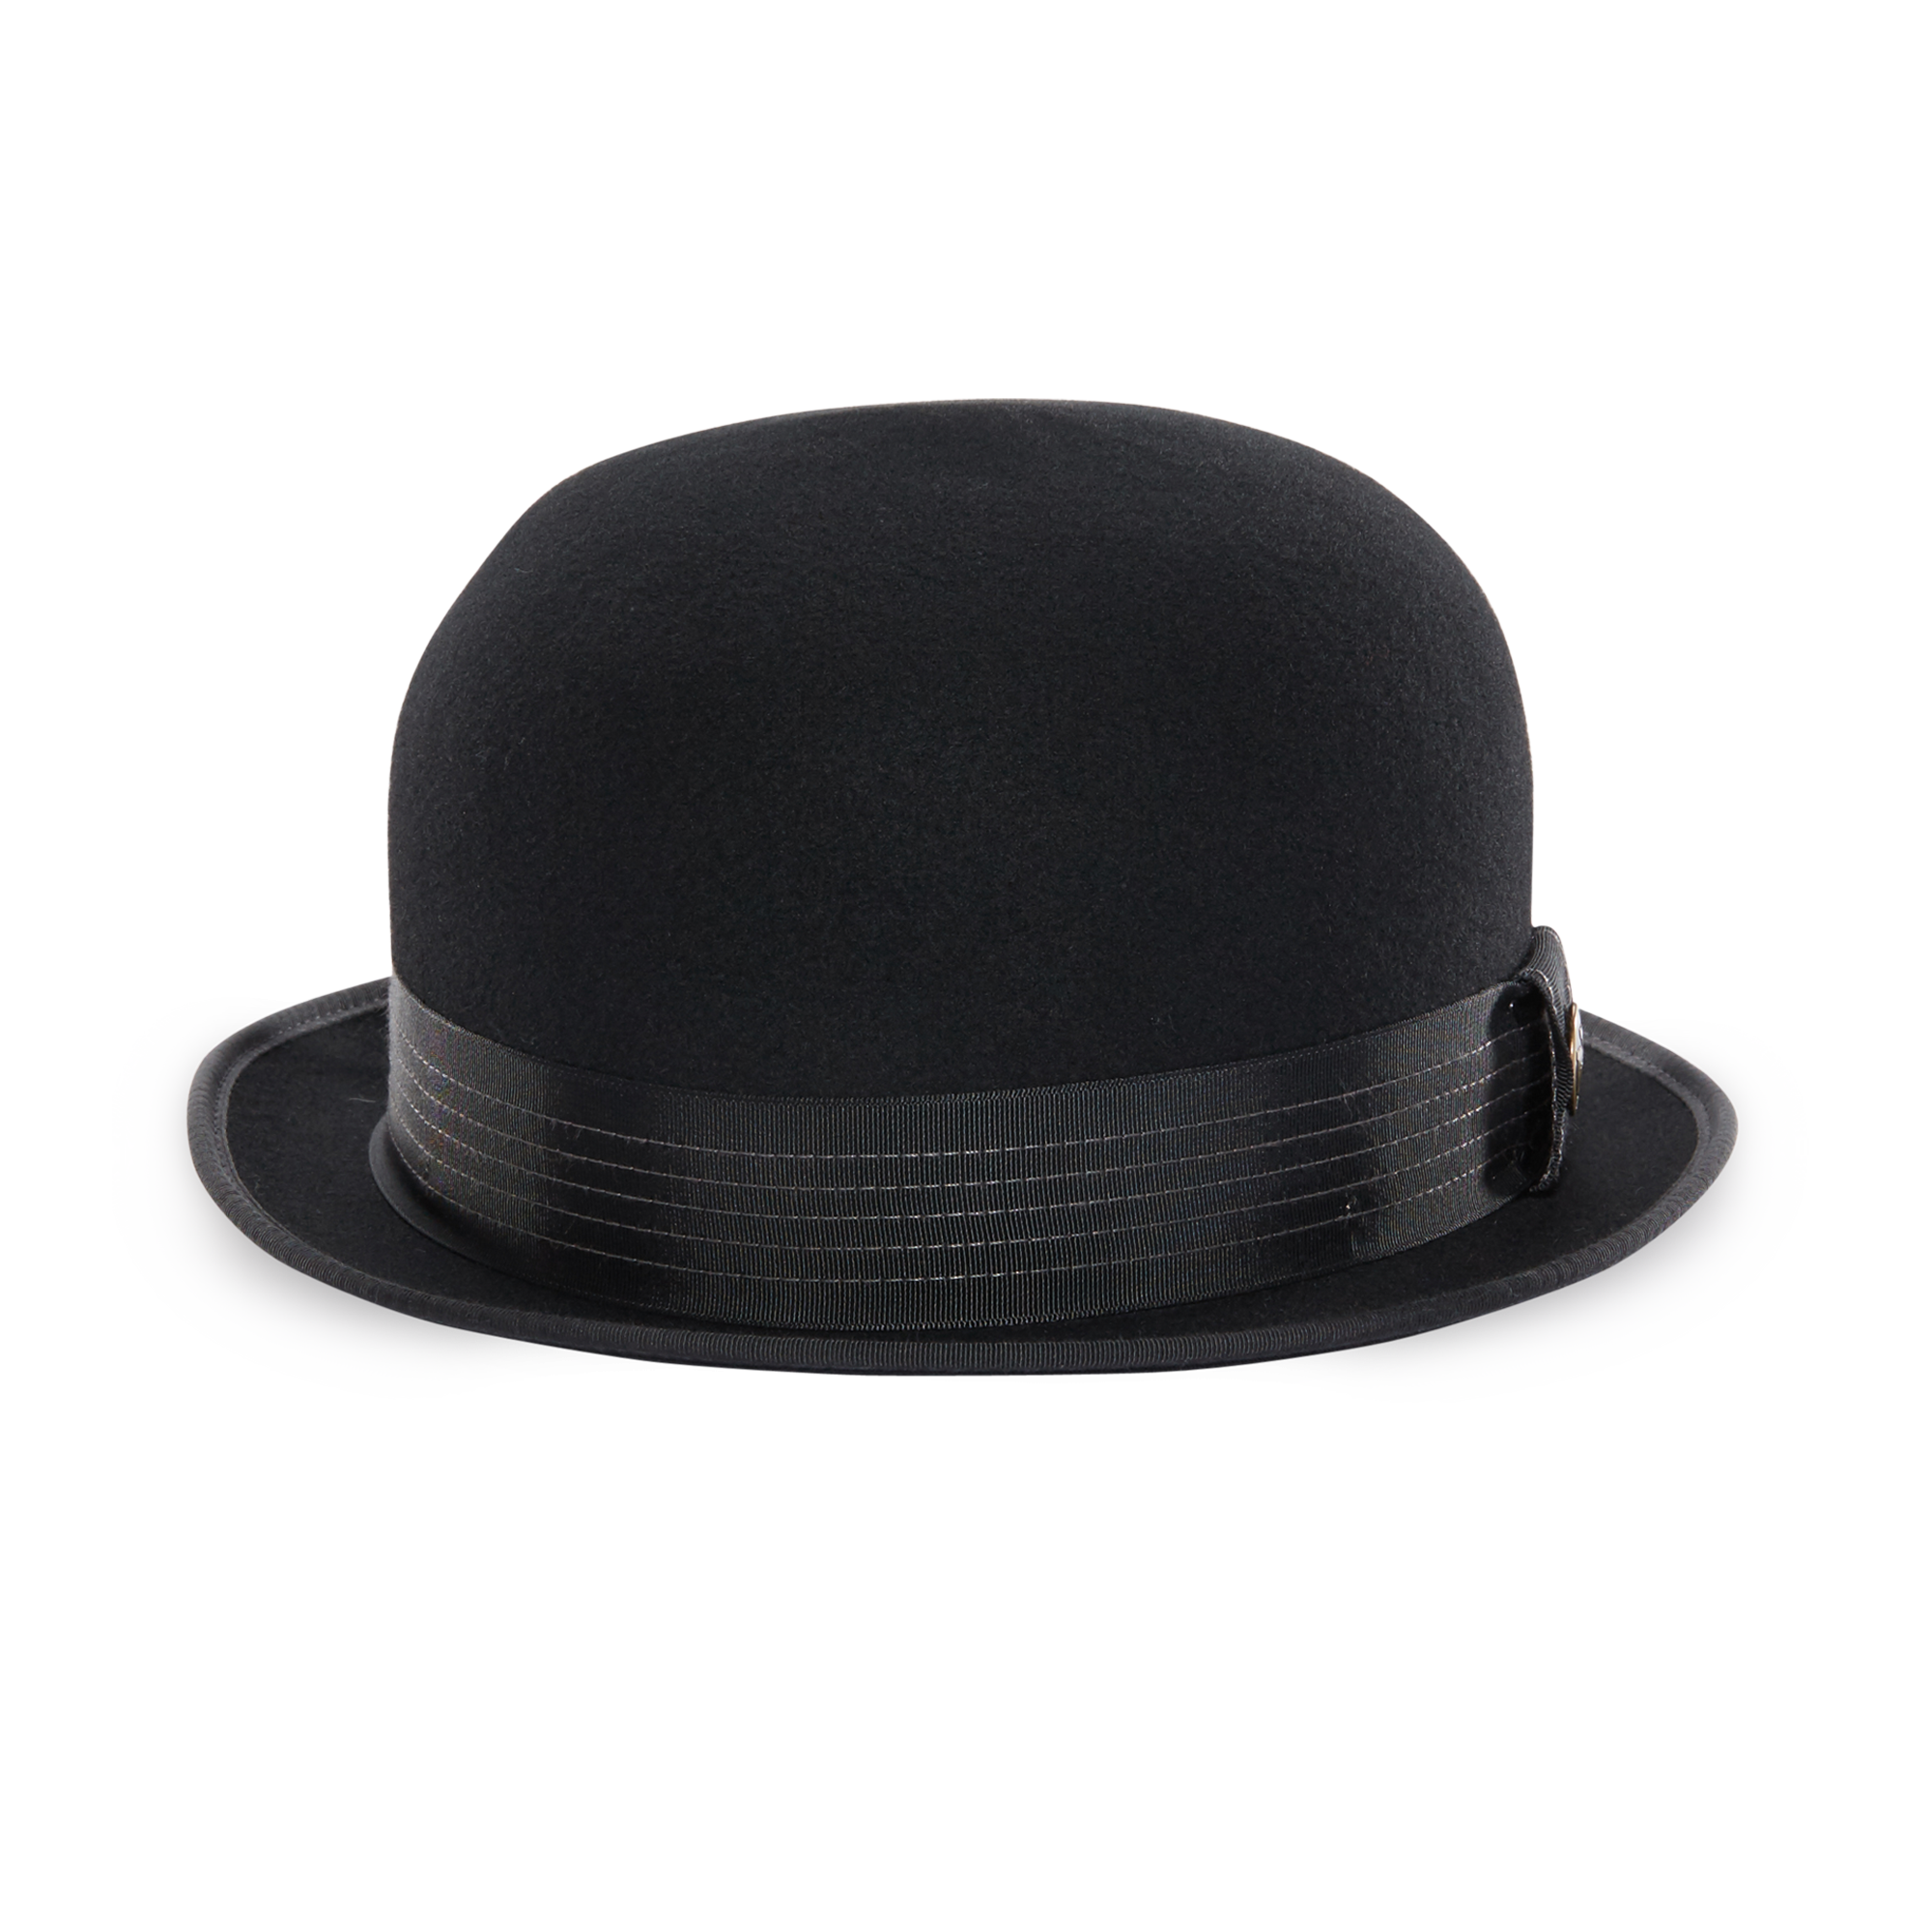 Bowler - The hat originally m